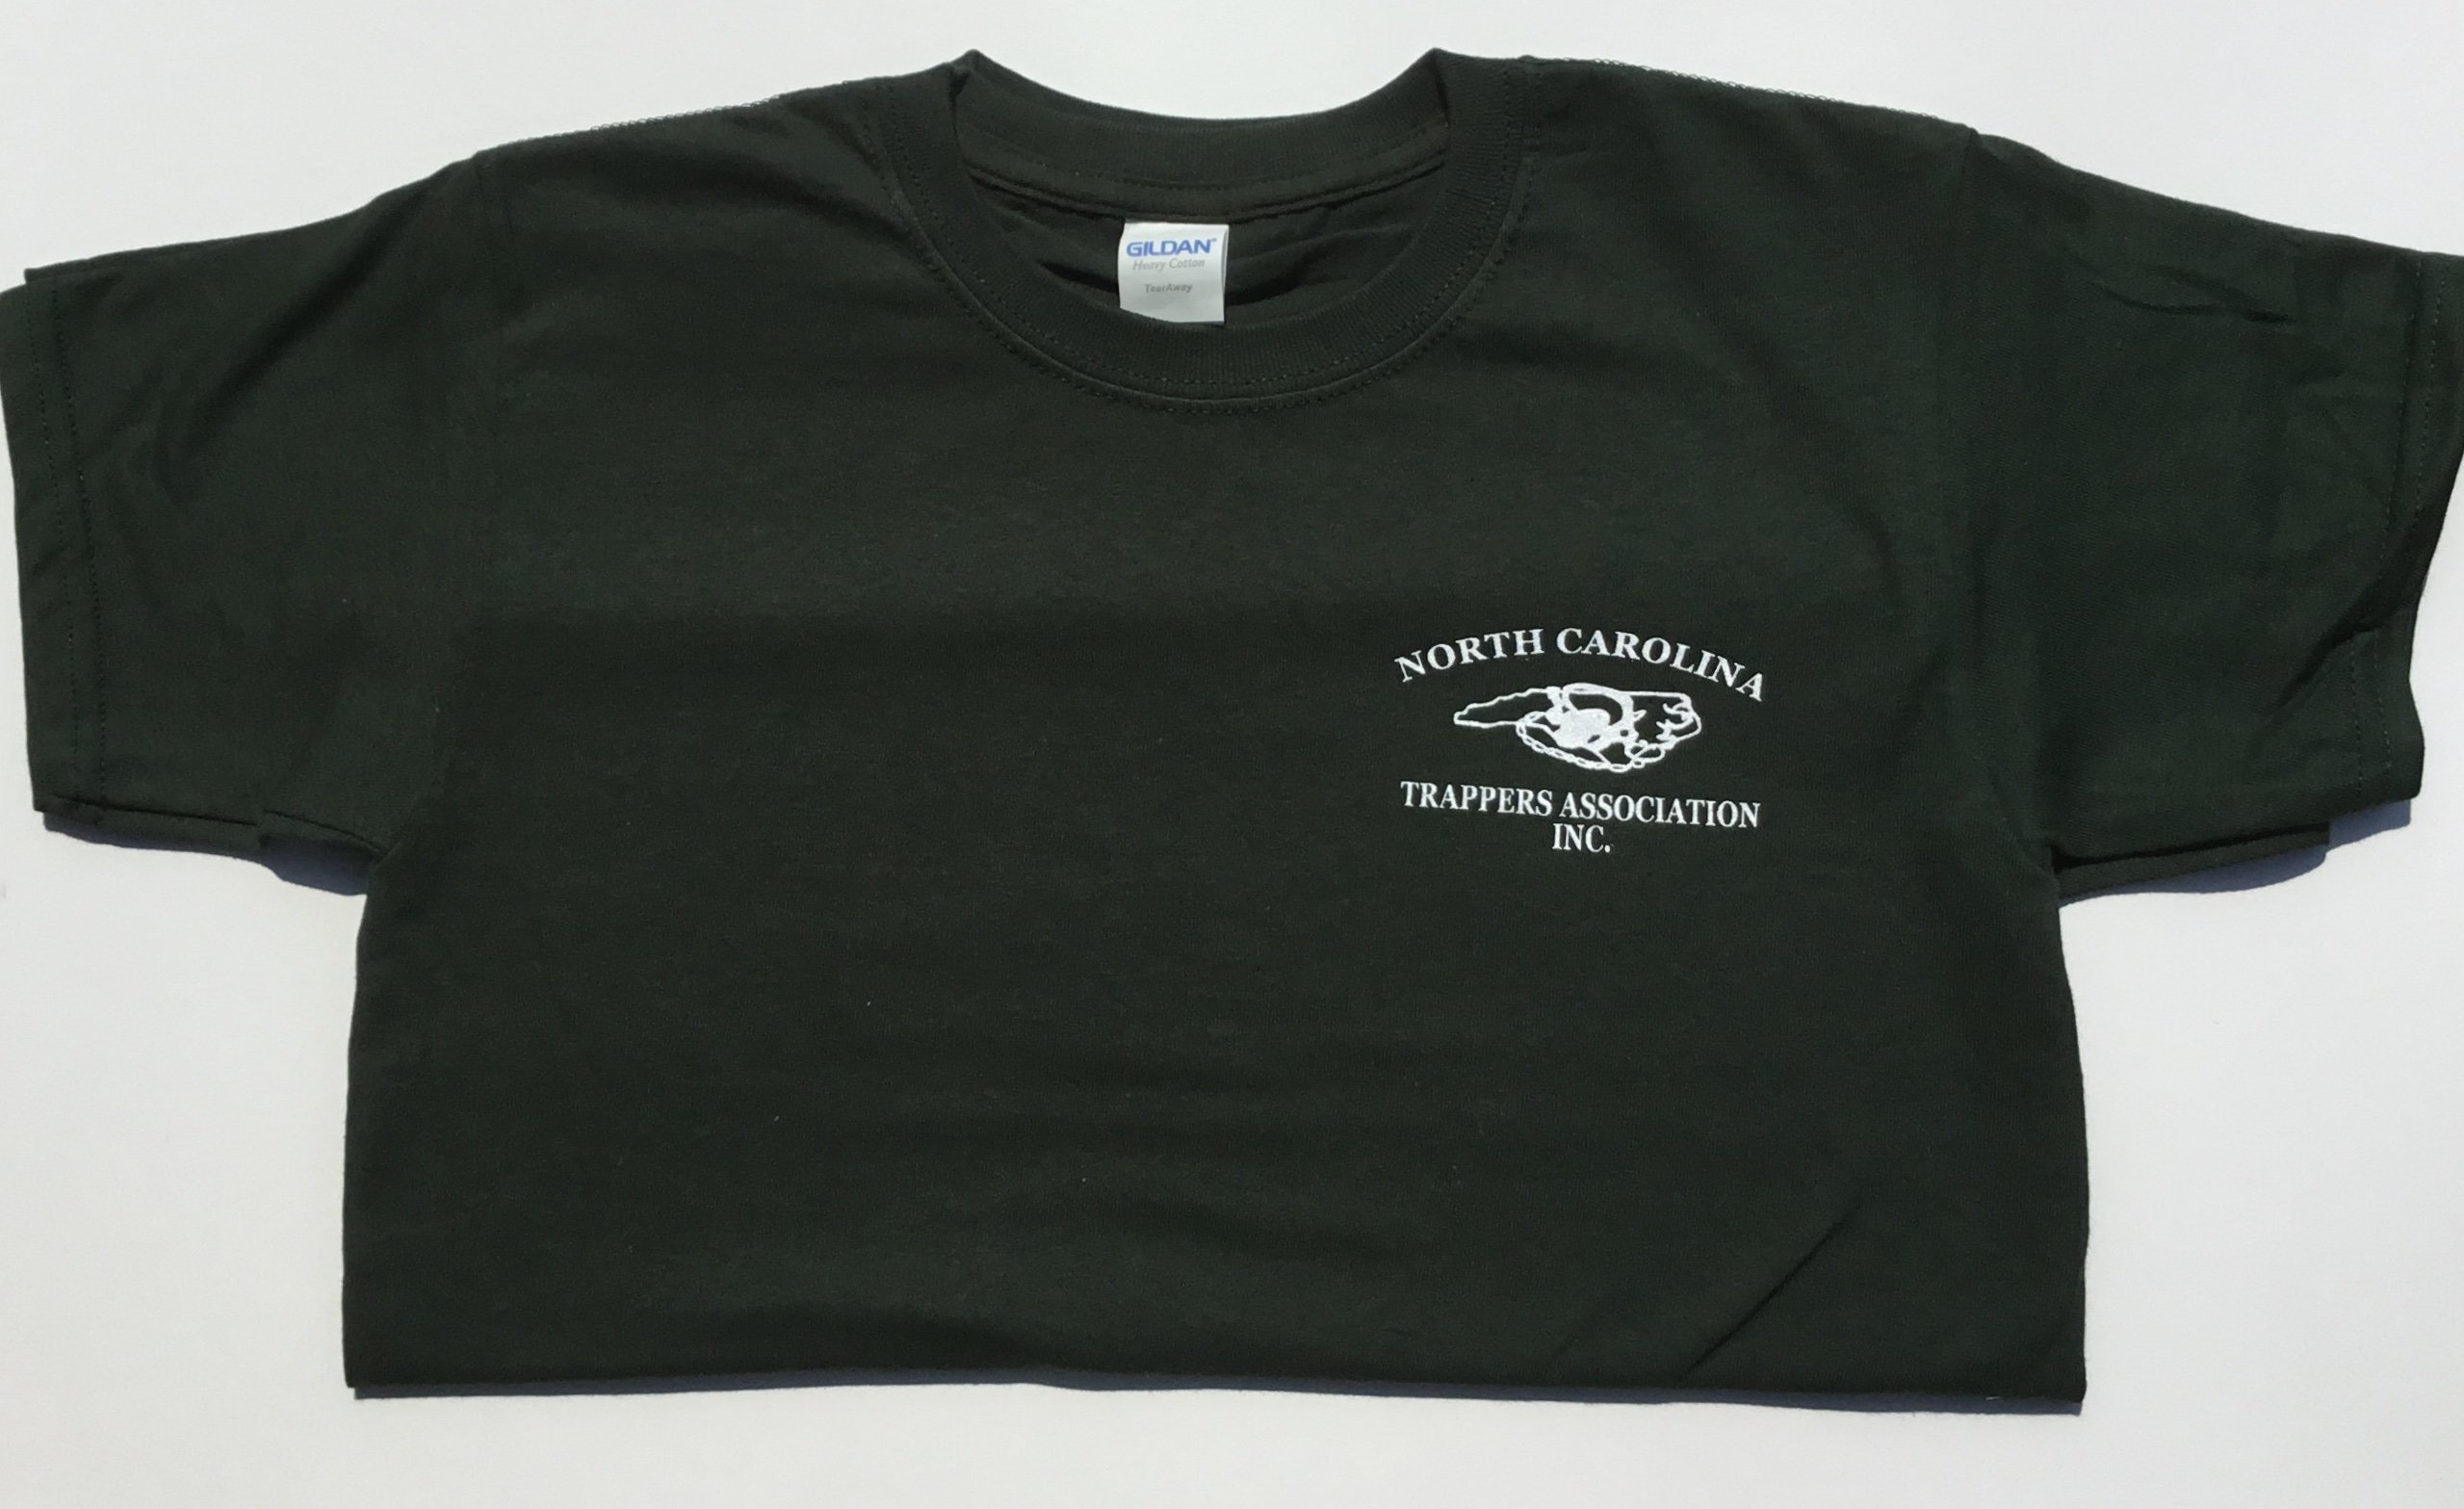 Green T-Shirt - North Carolina Trappers Association, Inc.